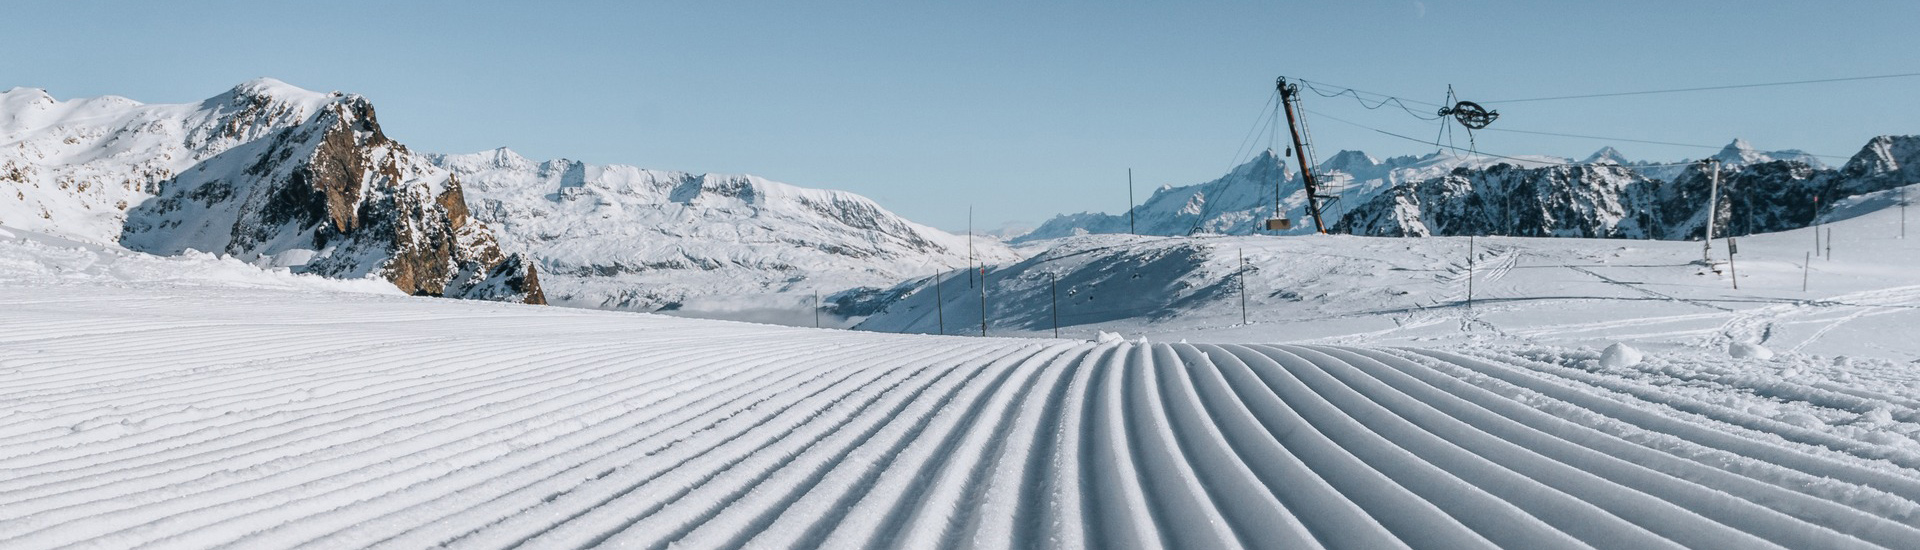 Chamrousse forfait piste ski hiver station montagne grenoble isère lyon rhone alpes france - © CH - OT Chamrousse